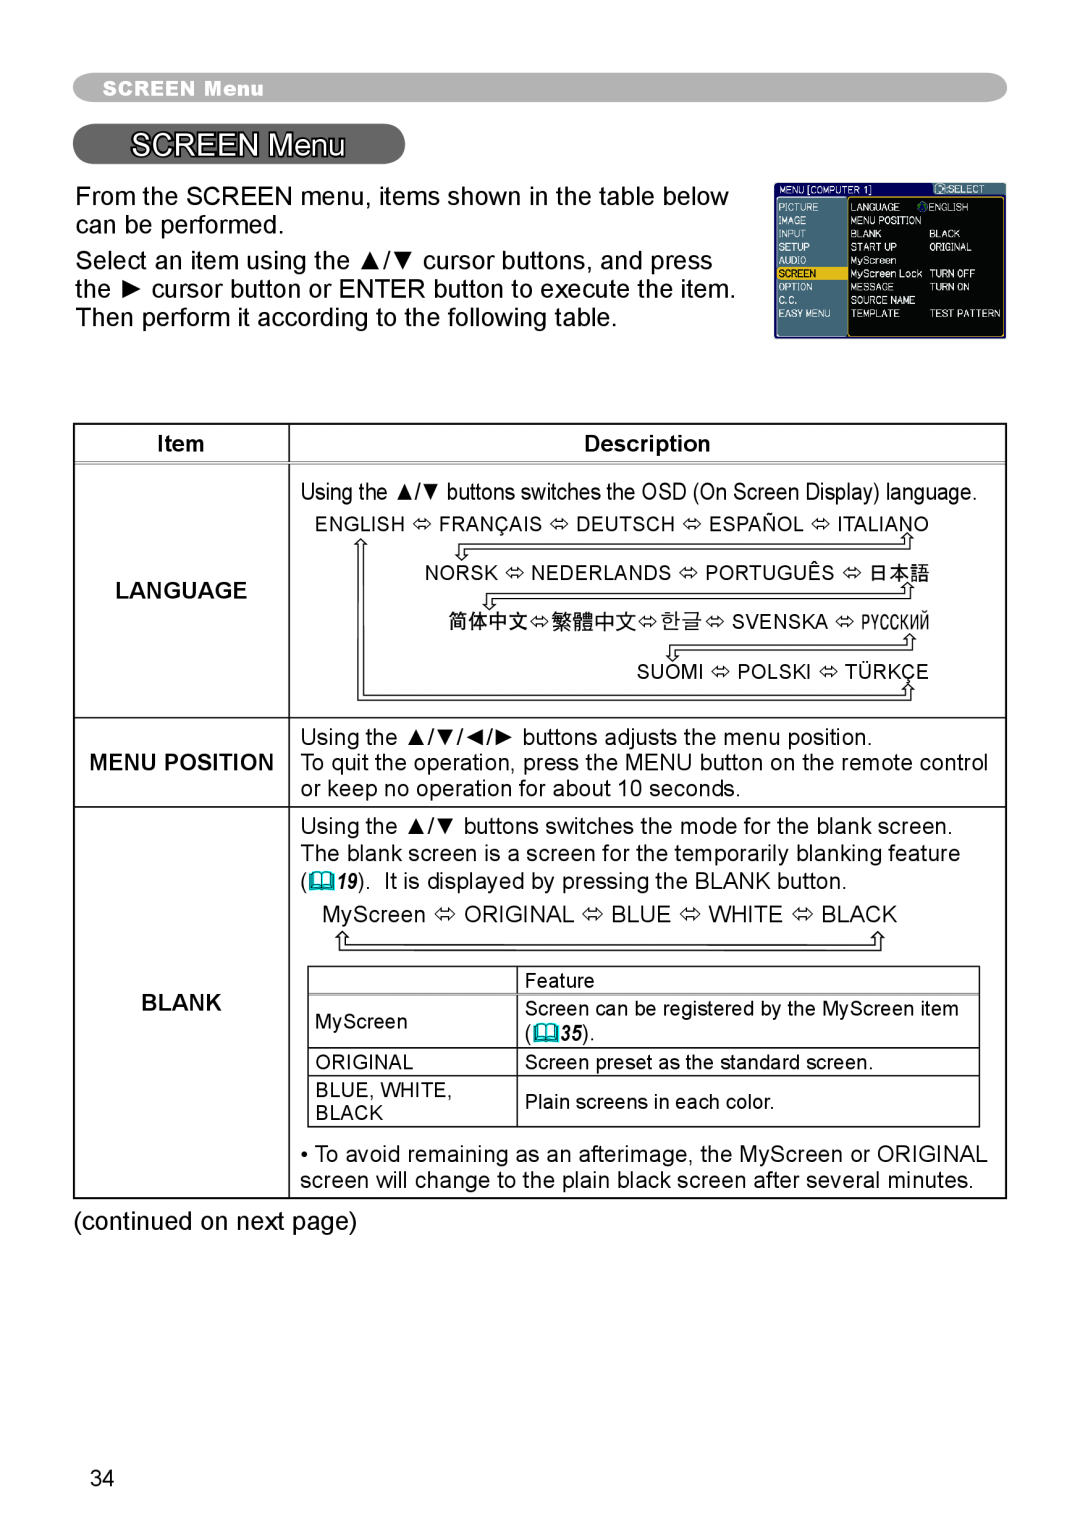 Dukane 8783 user manual SCREEN Menu, Description, Language, Blank 